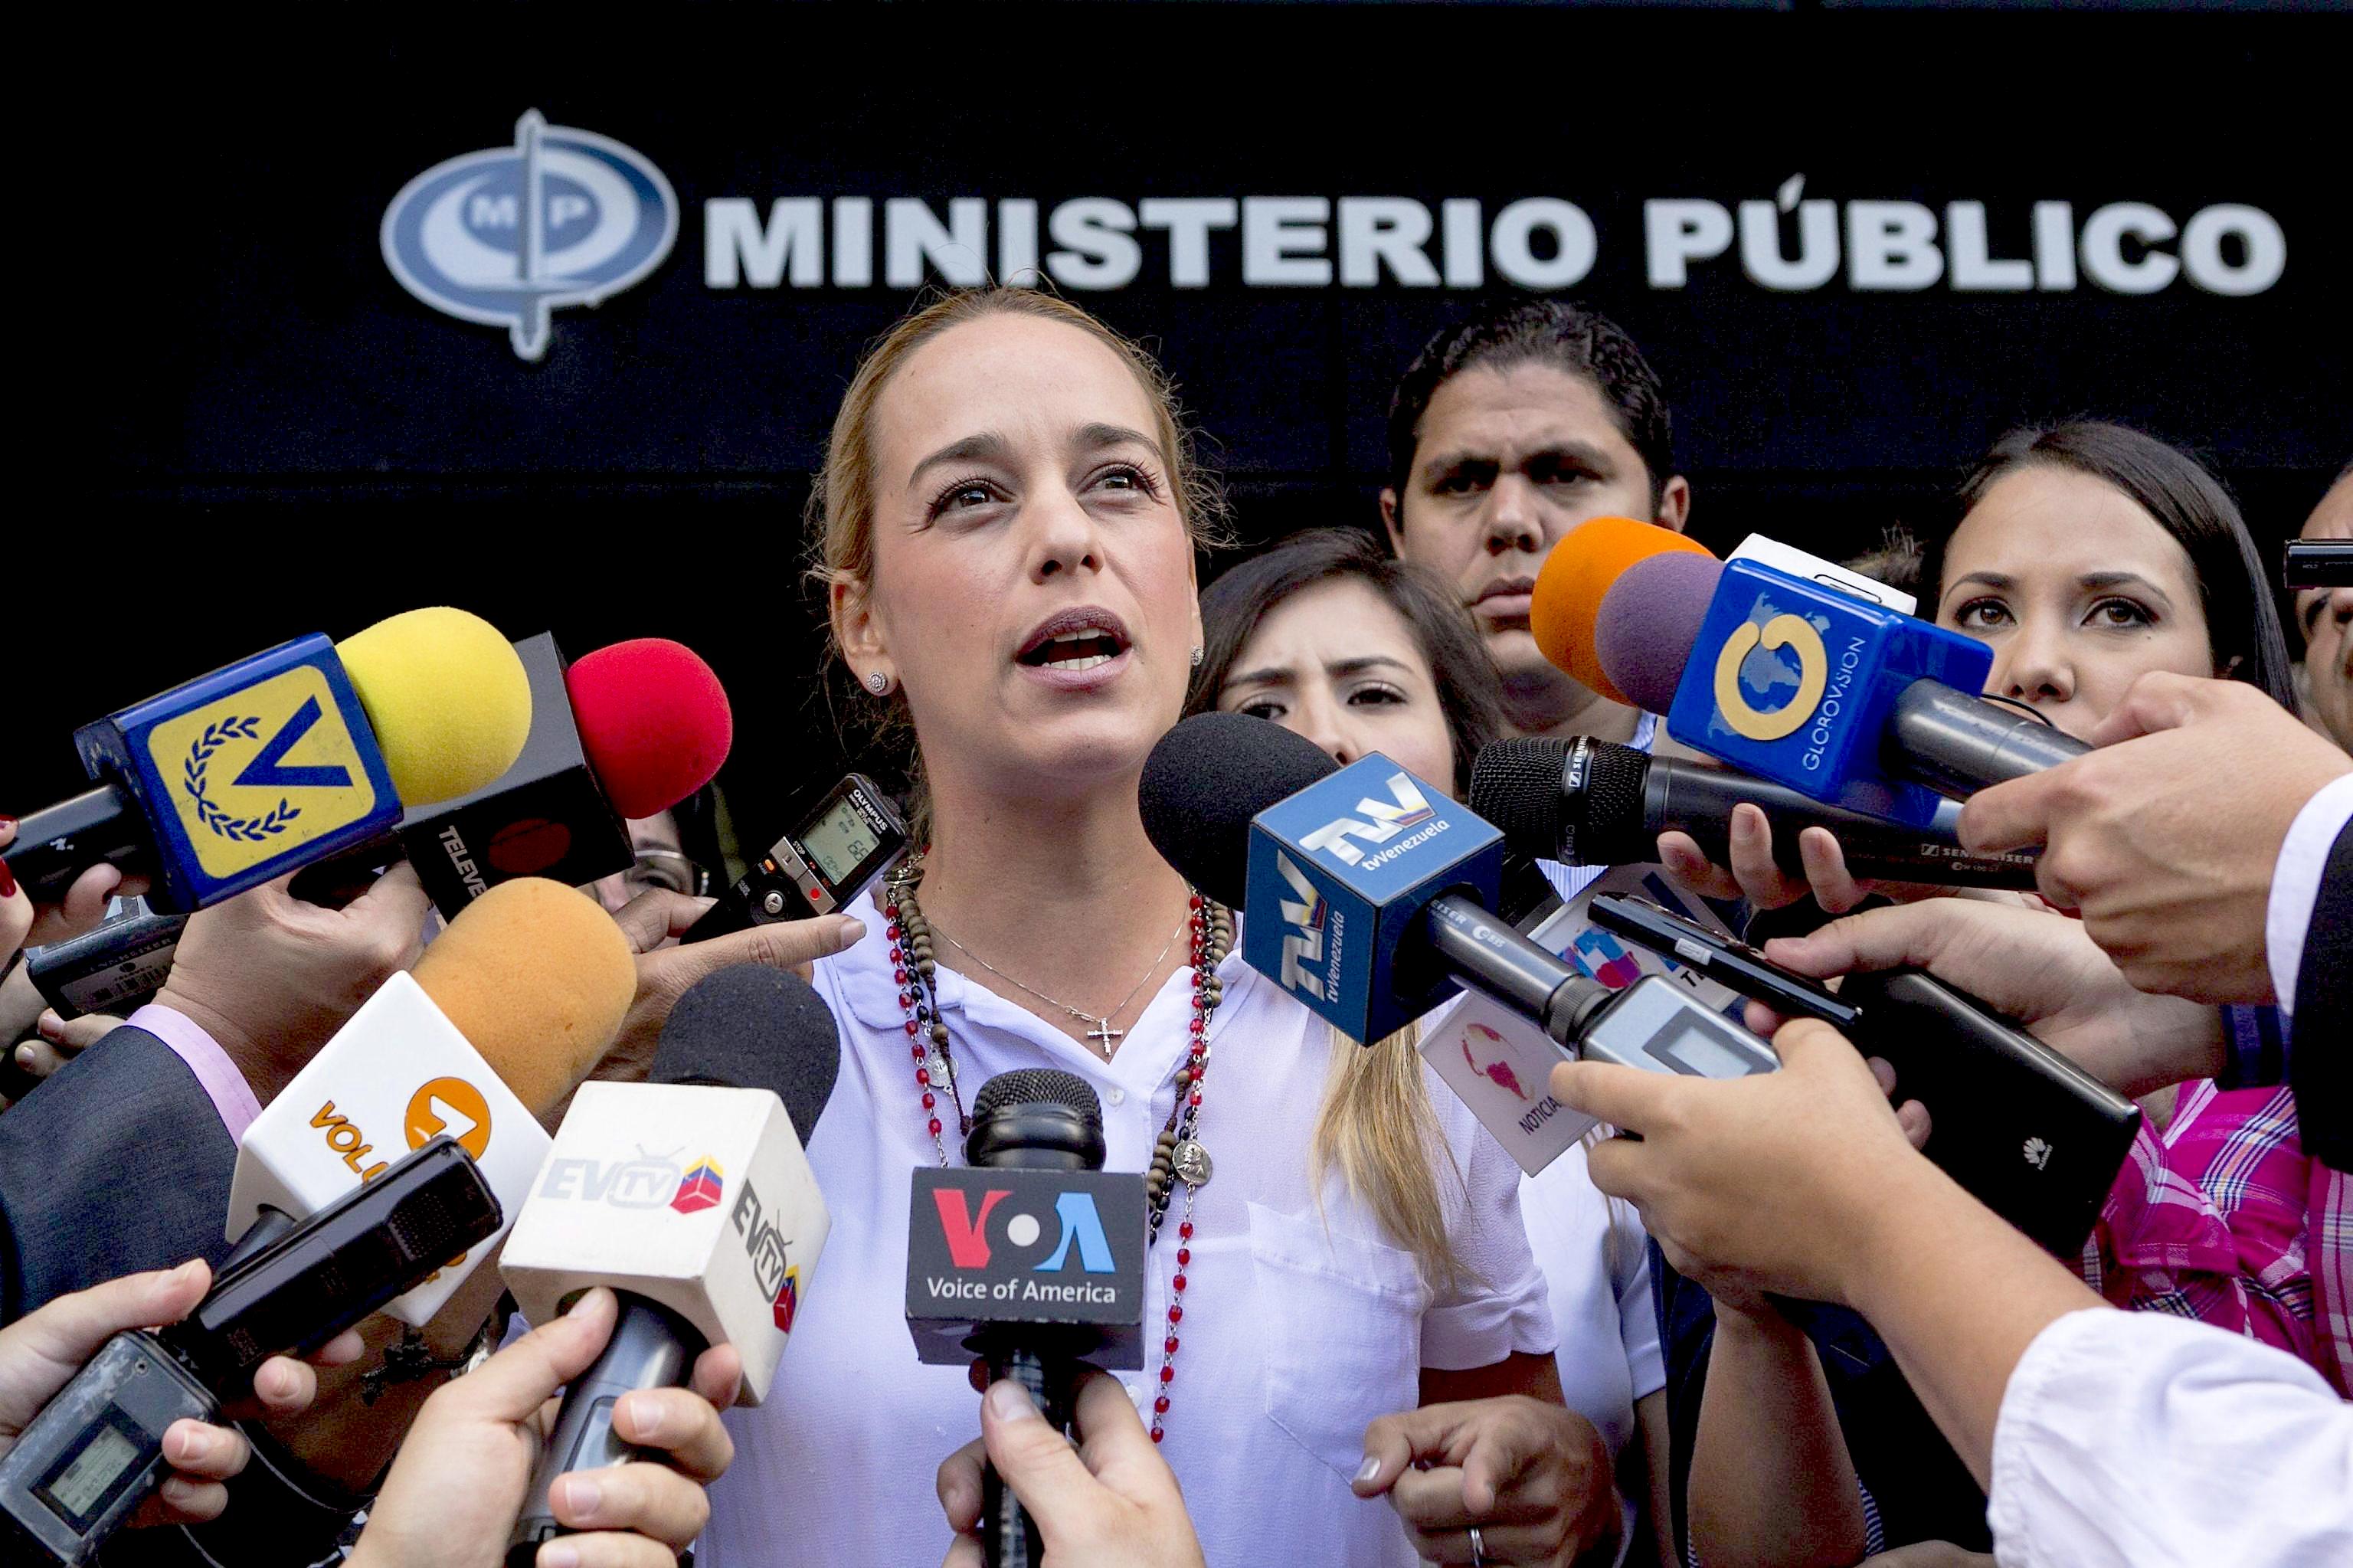 The wife of Venezuelan oposition leader Leopoldo Lopez